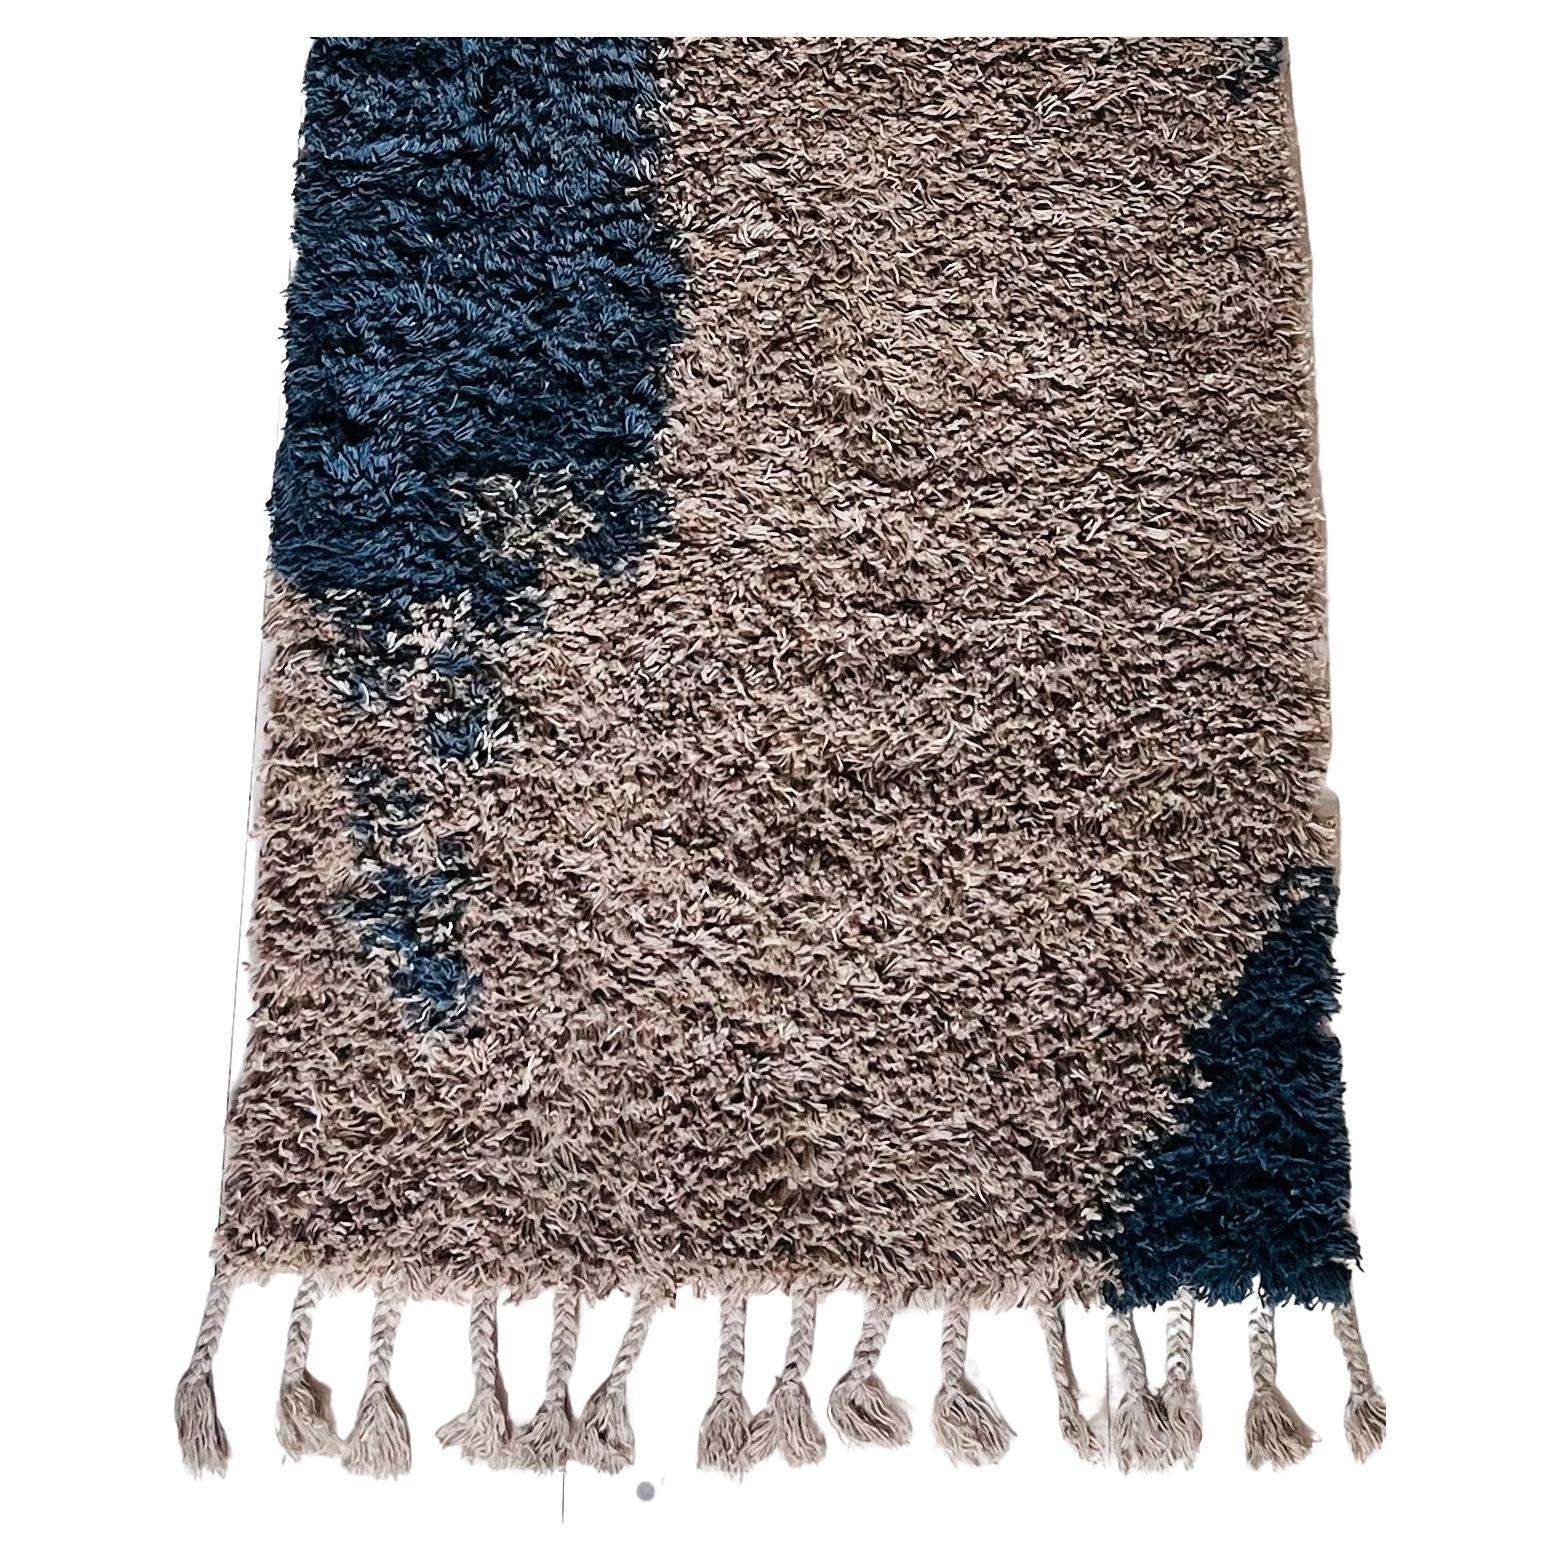 Handknotted Rya rug ’Jala’ For Sale